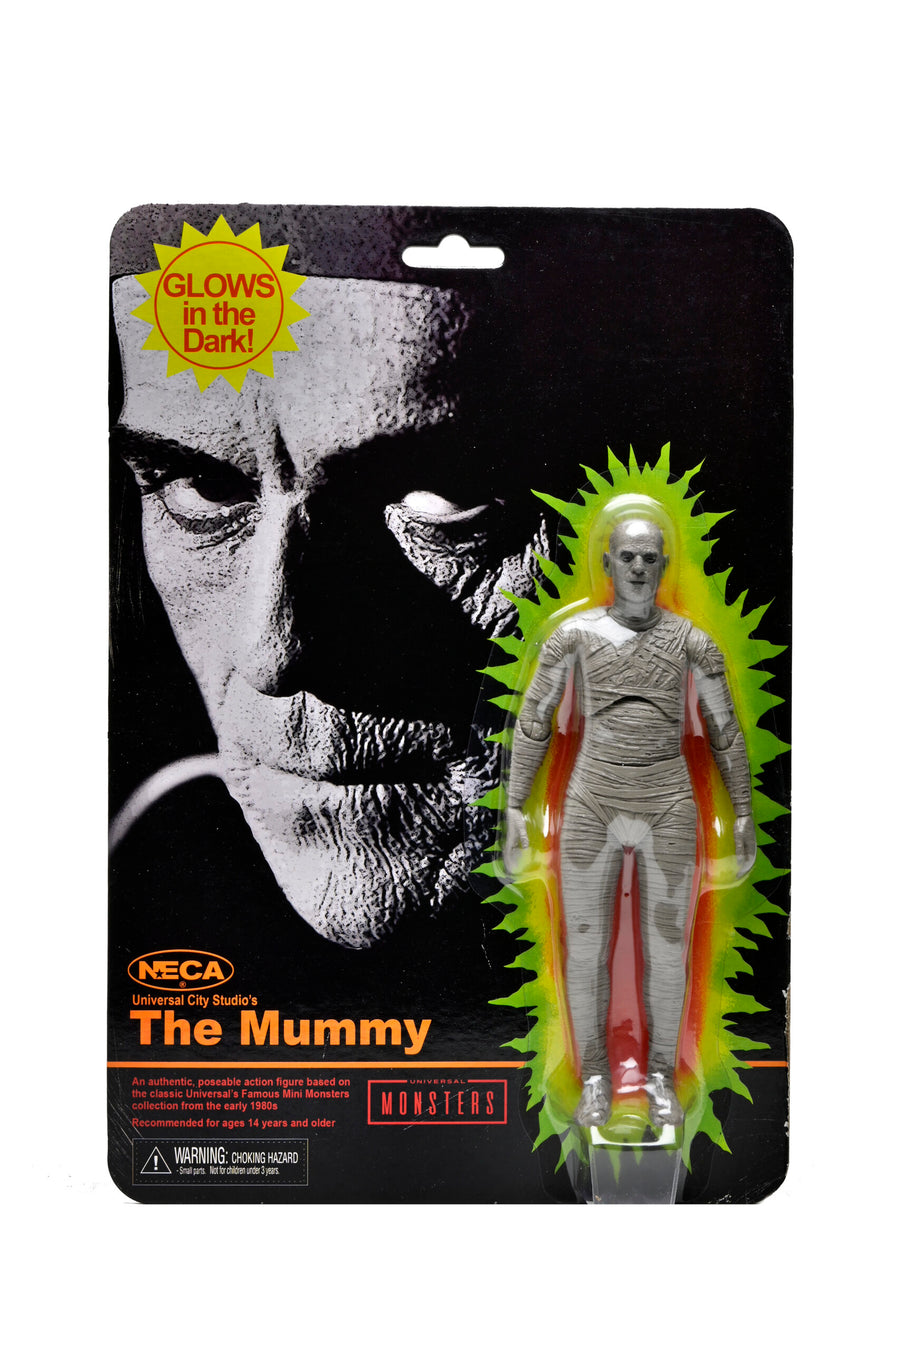 The Mummy - NECA Universal City Studios Figure